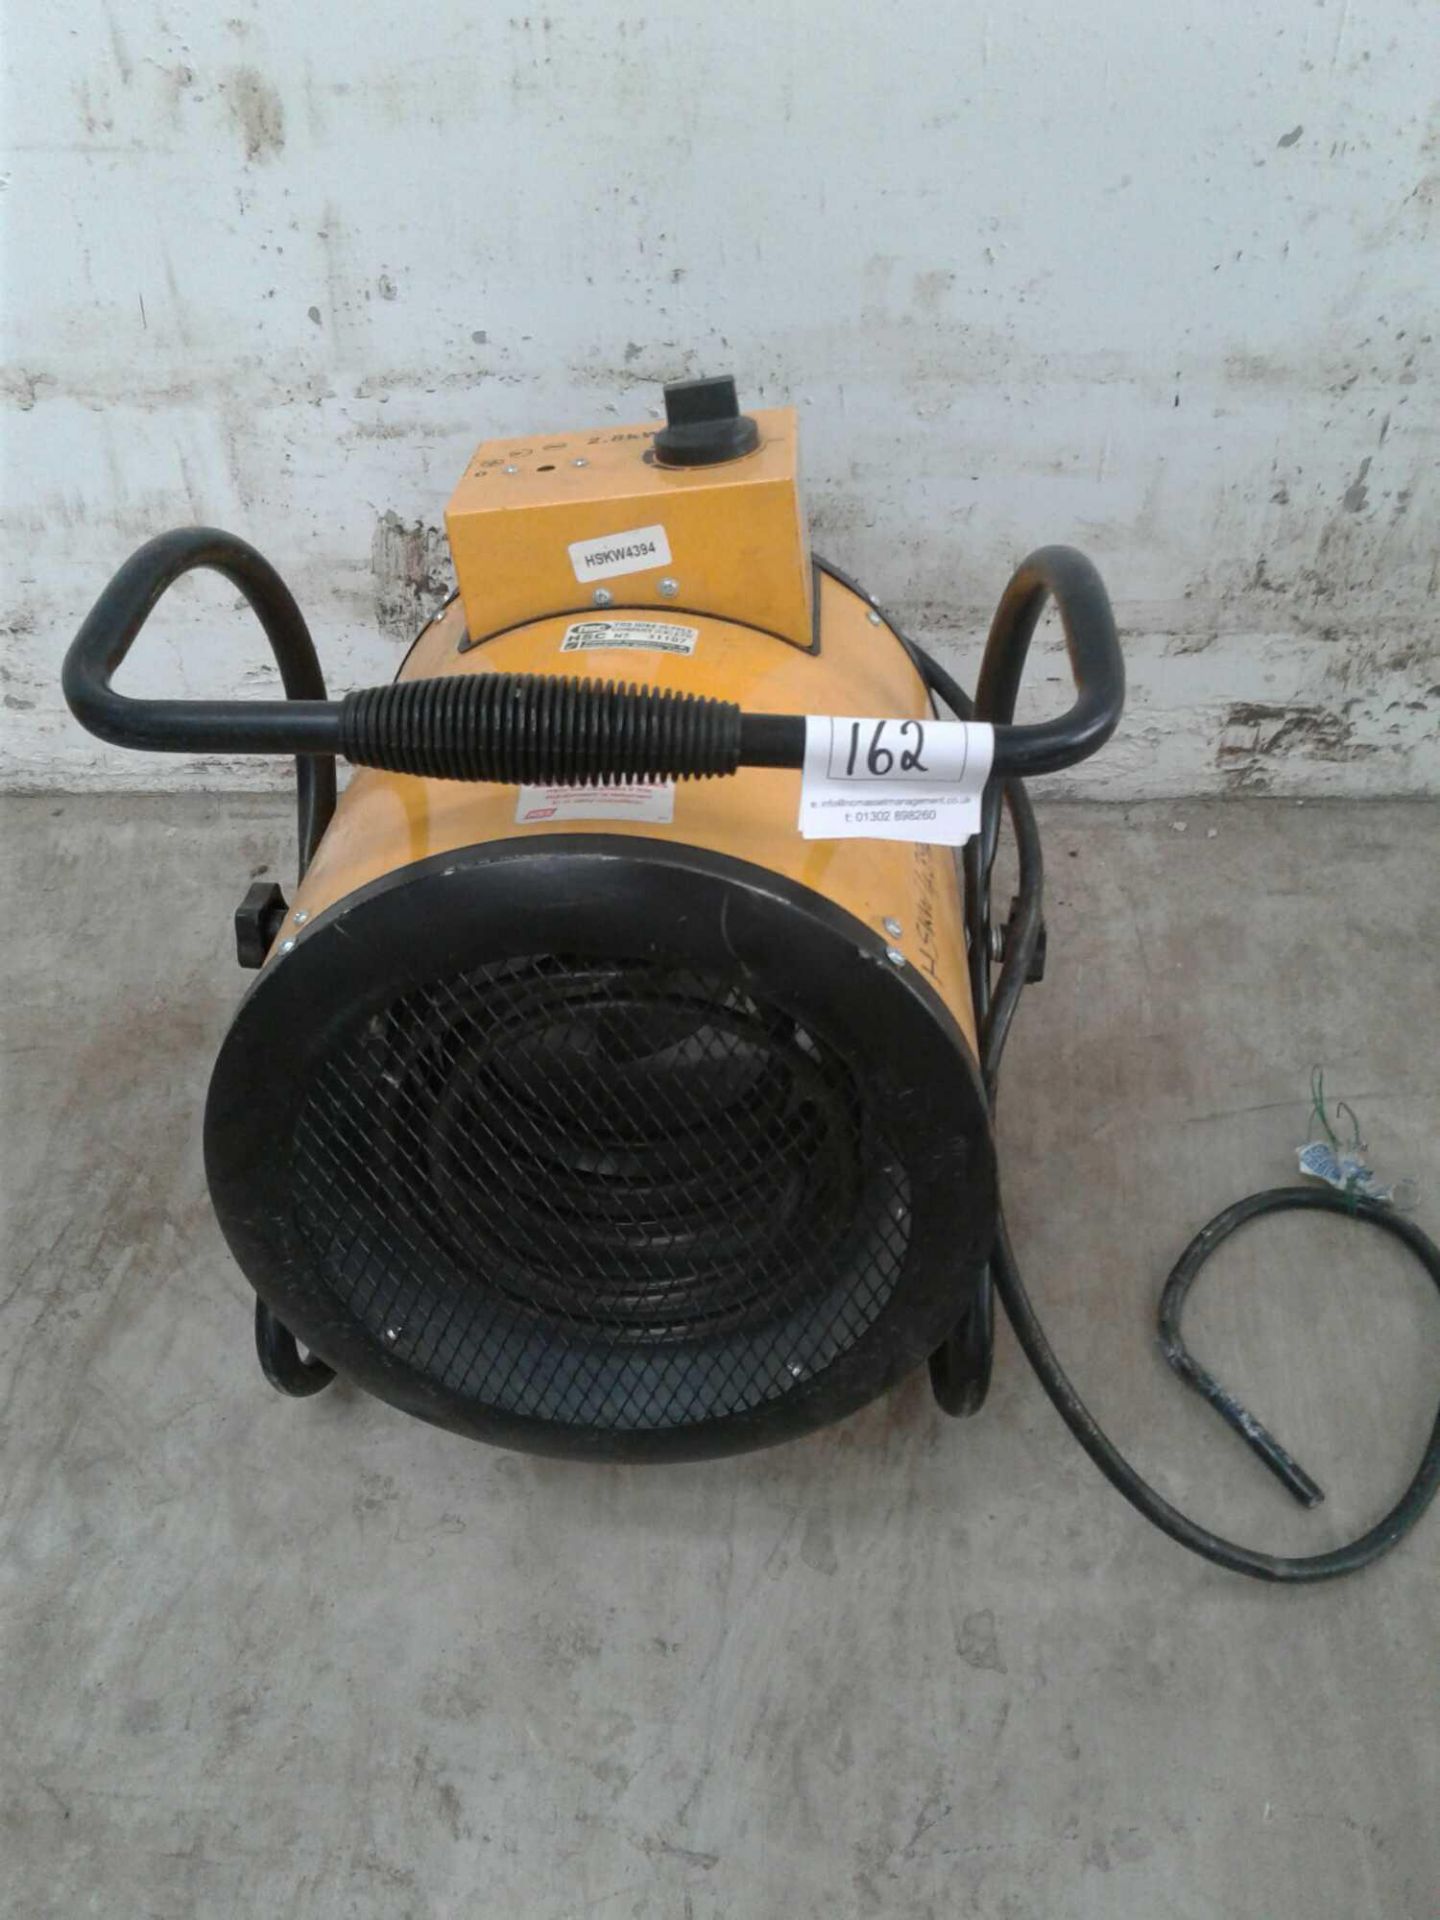 2.8 kW portable heater